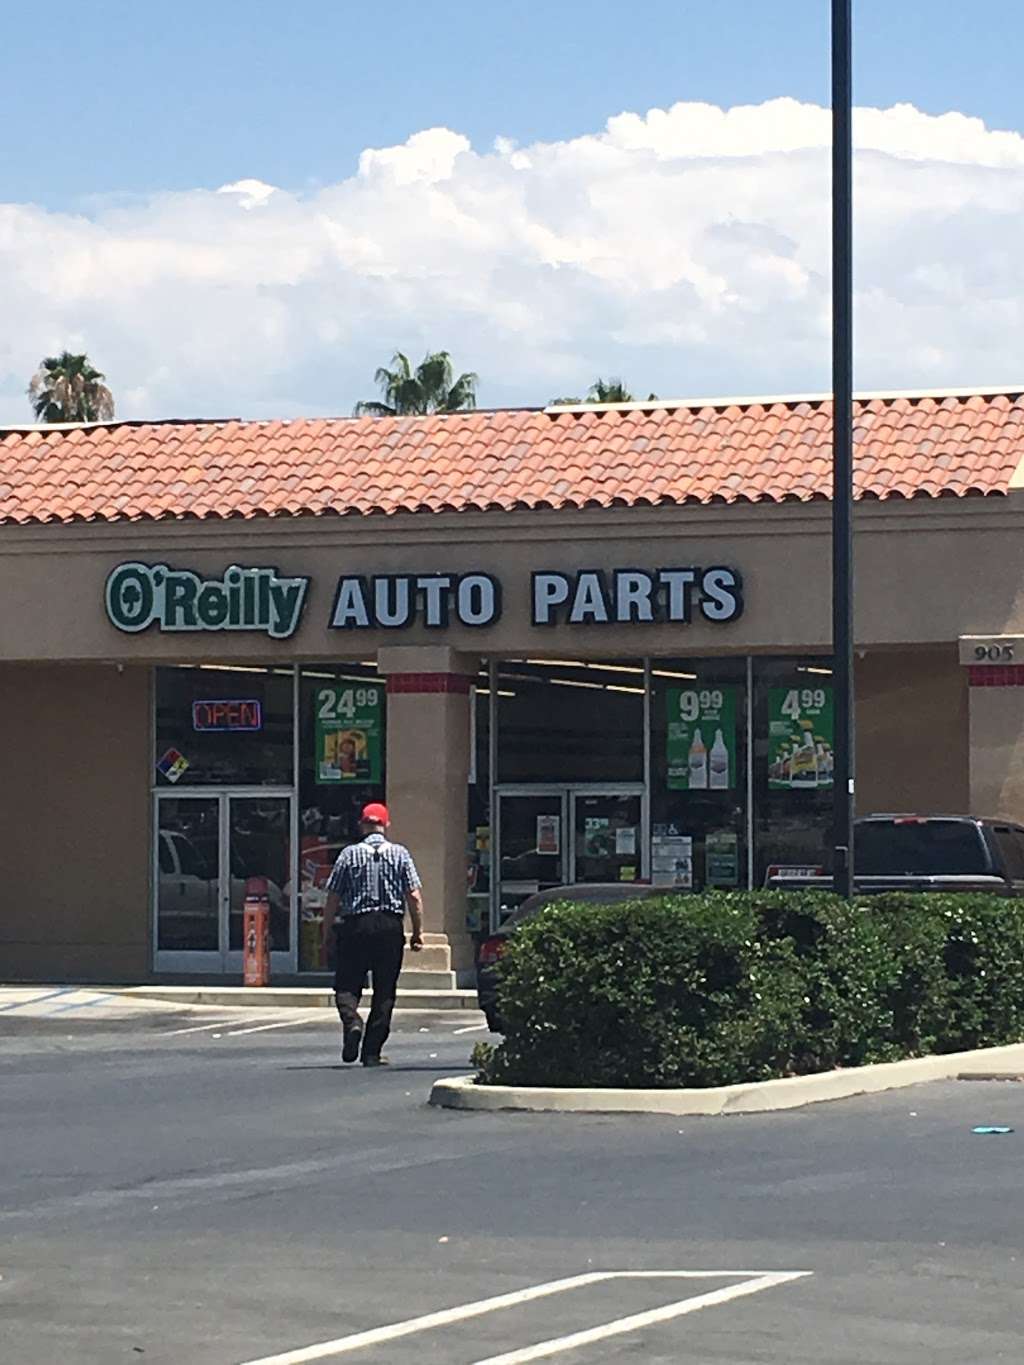 OReilly Auto Parts | 905 Kendall Dr, San Bernardino, CA 92407 | Phone: (909) 881-1115